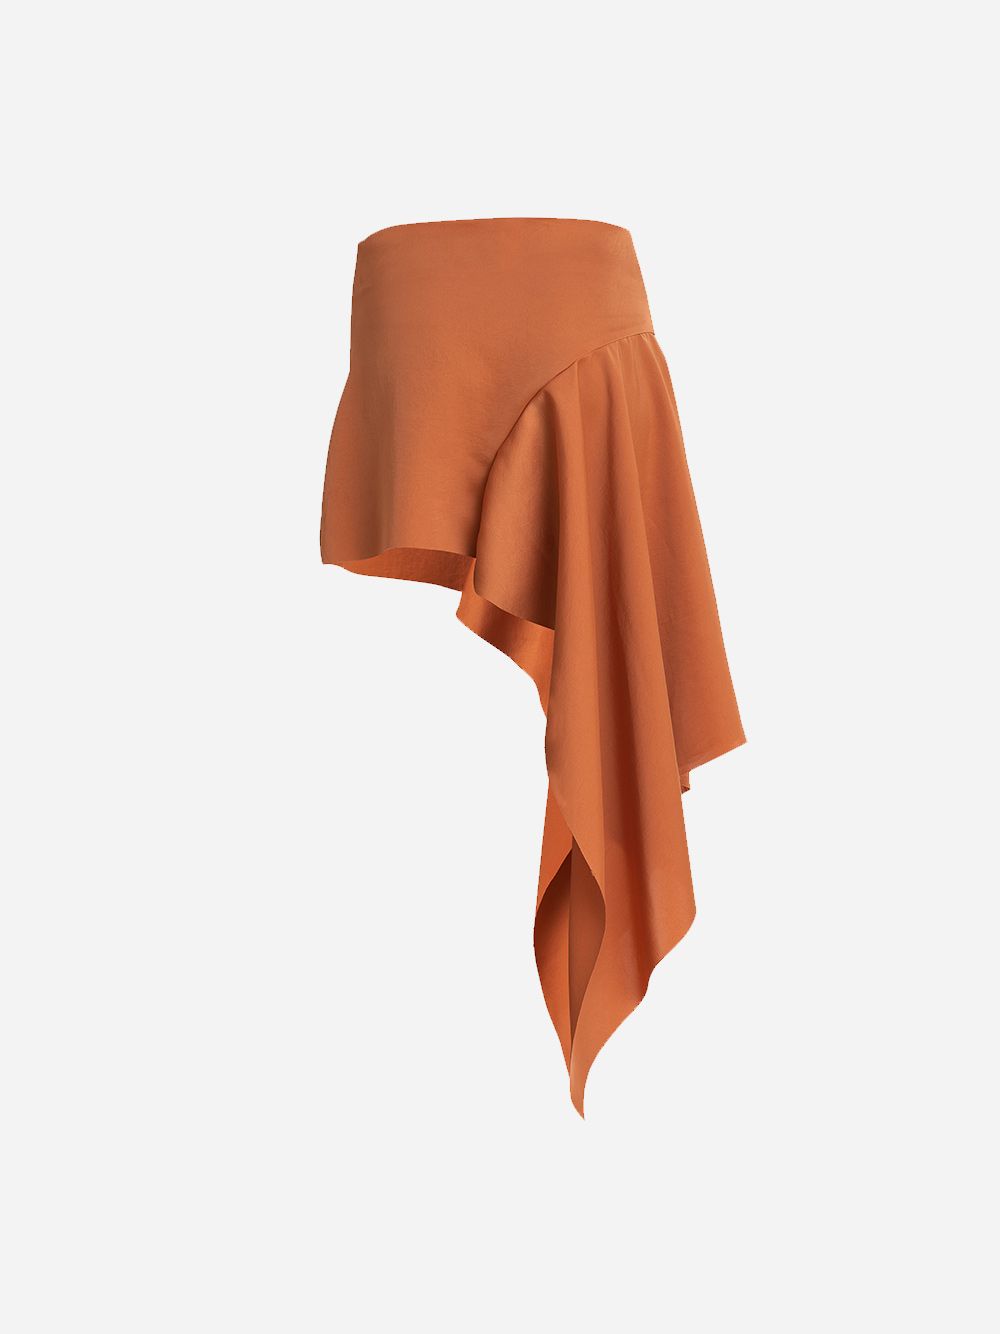 Orange Clay Skirt | Carolina Machado 